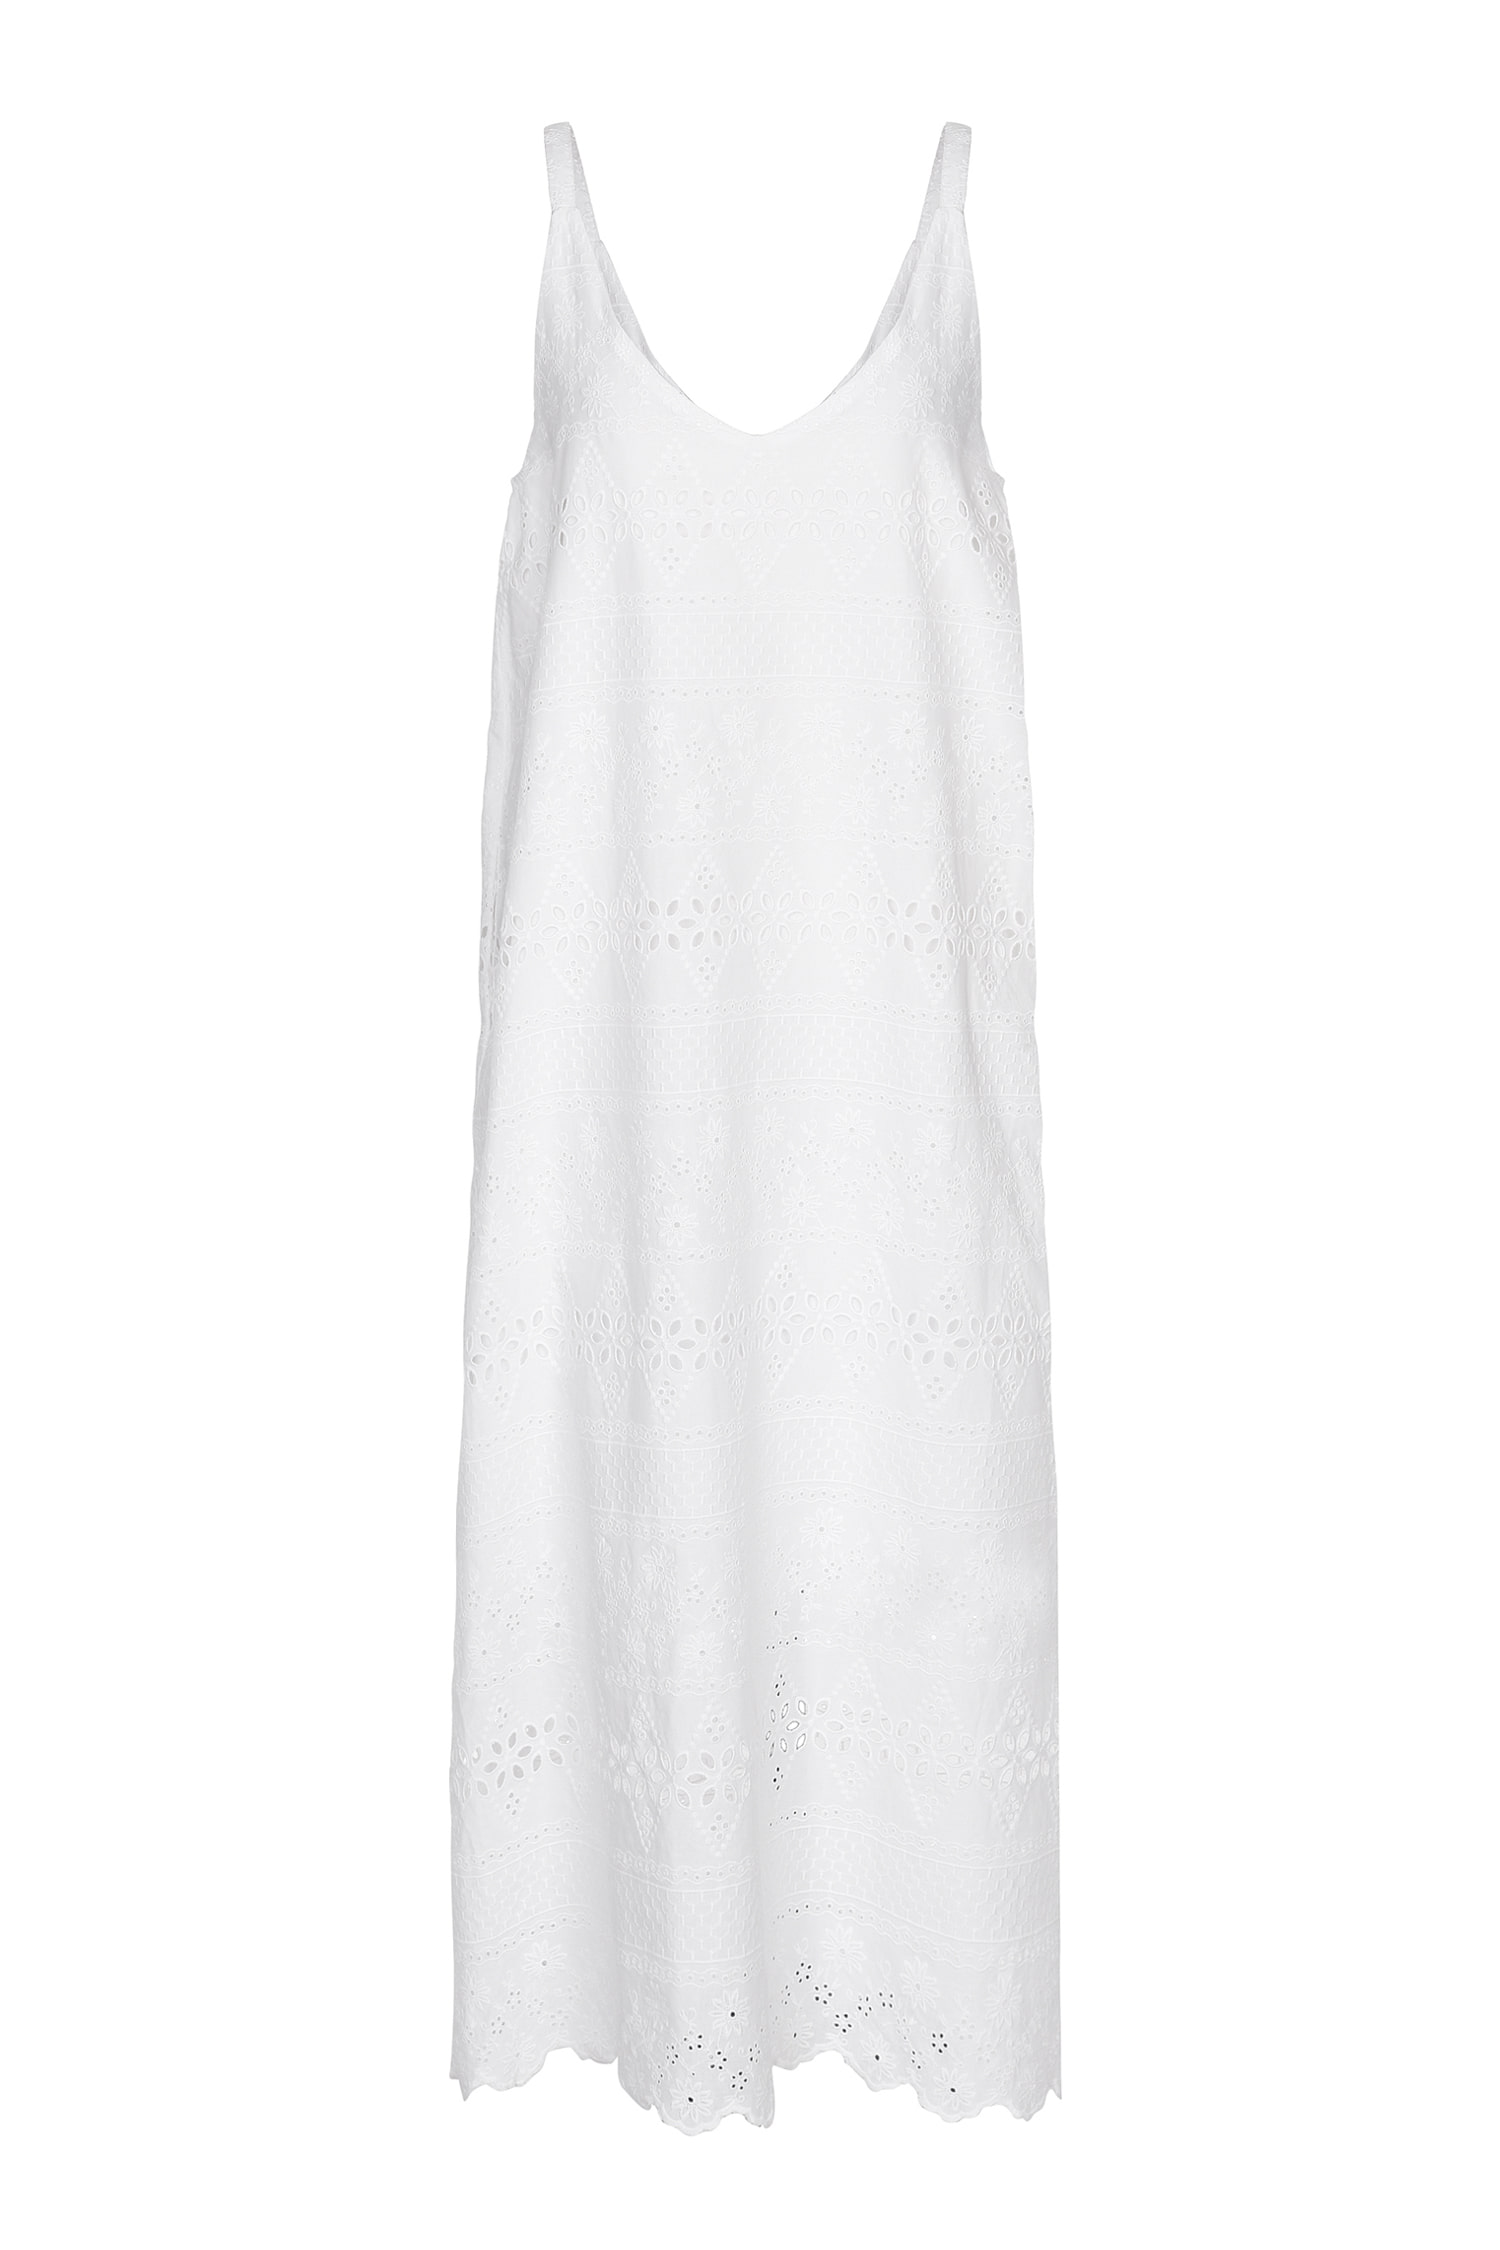 Flower lace sleeveless dress - Ivory